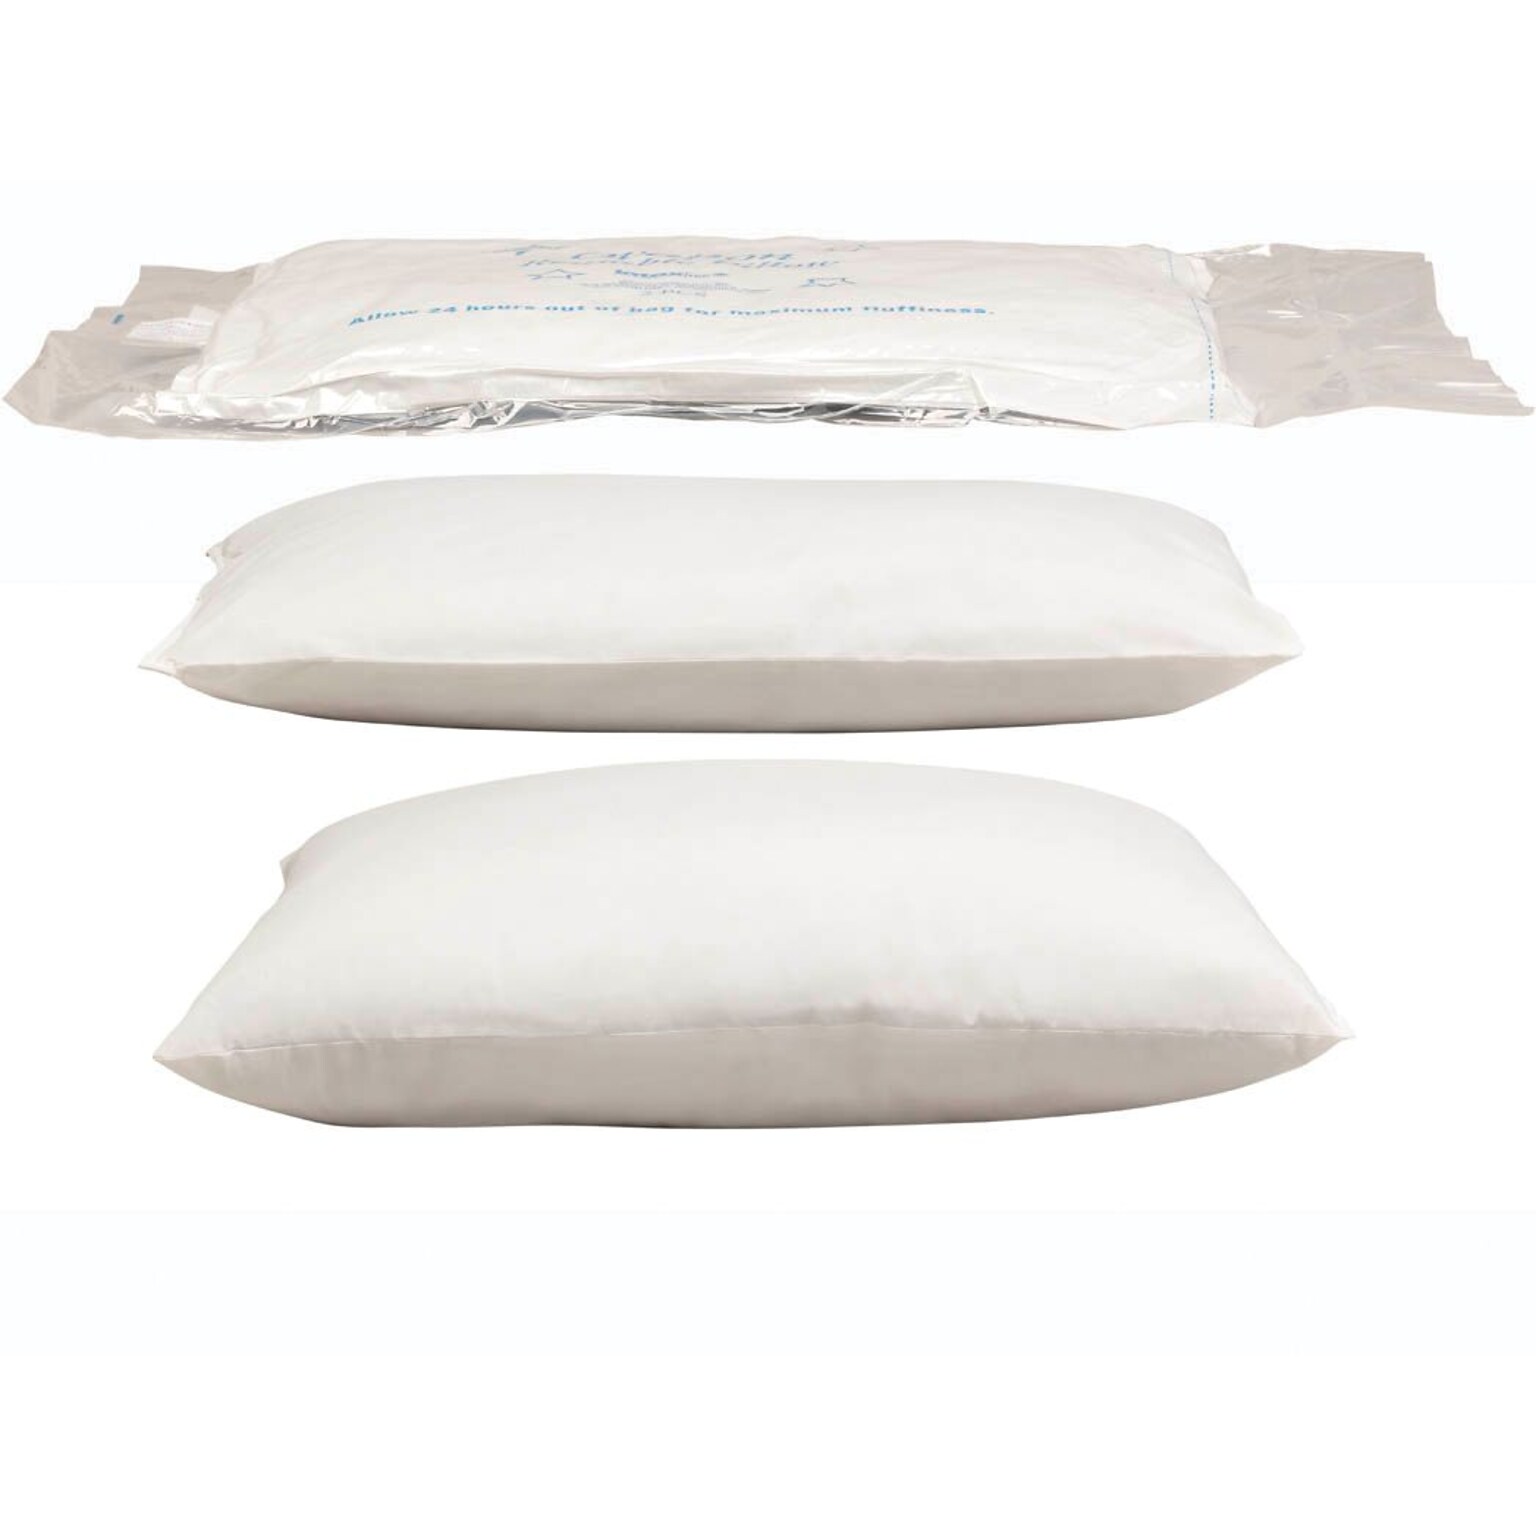 Ovation® Series Pillows, White, 24L x 18W, 16 oz, 2/Pack